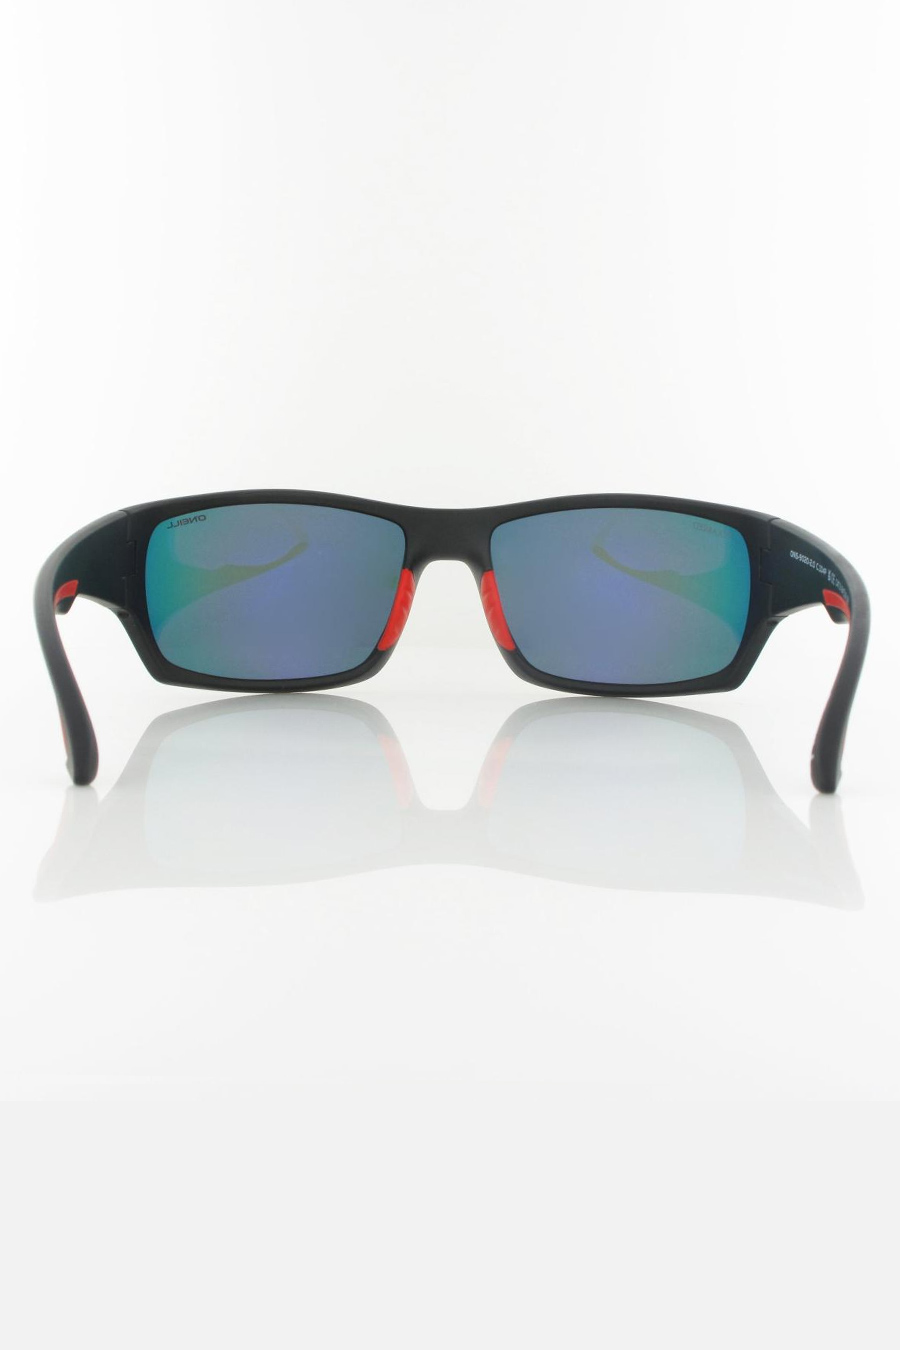 Солнечные очки ONEILL ONS-9020-20-104P